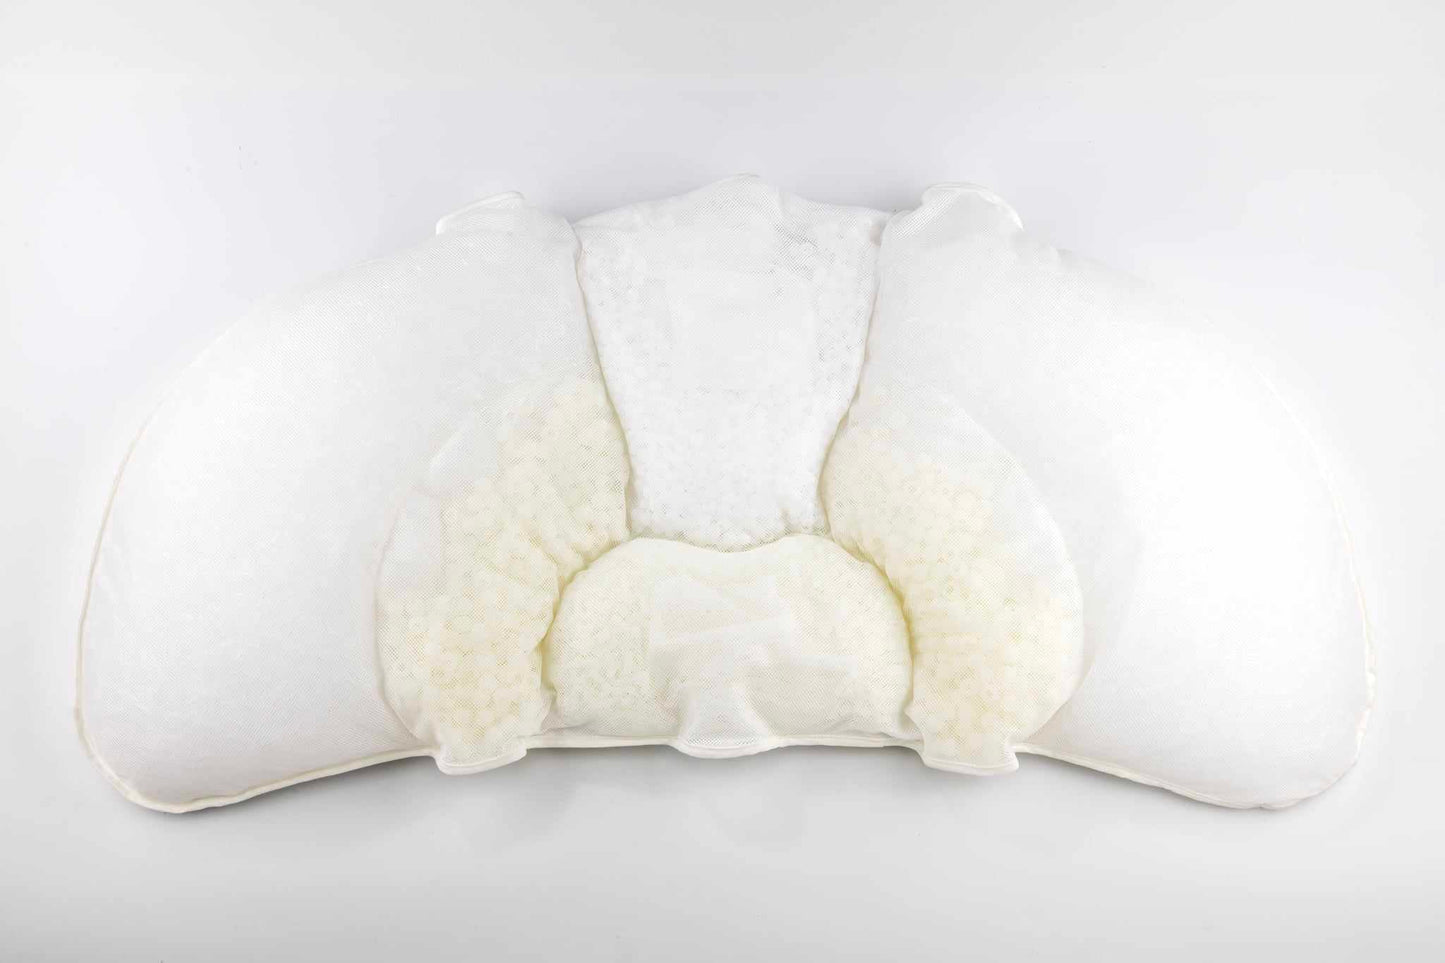 Pillow-Fit MASTER 連DRYICE涼感專用枕套套裝